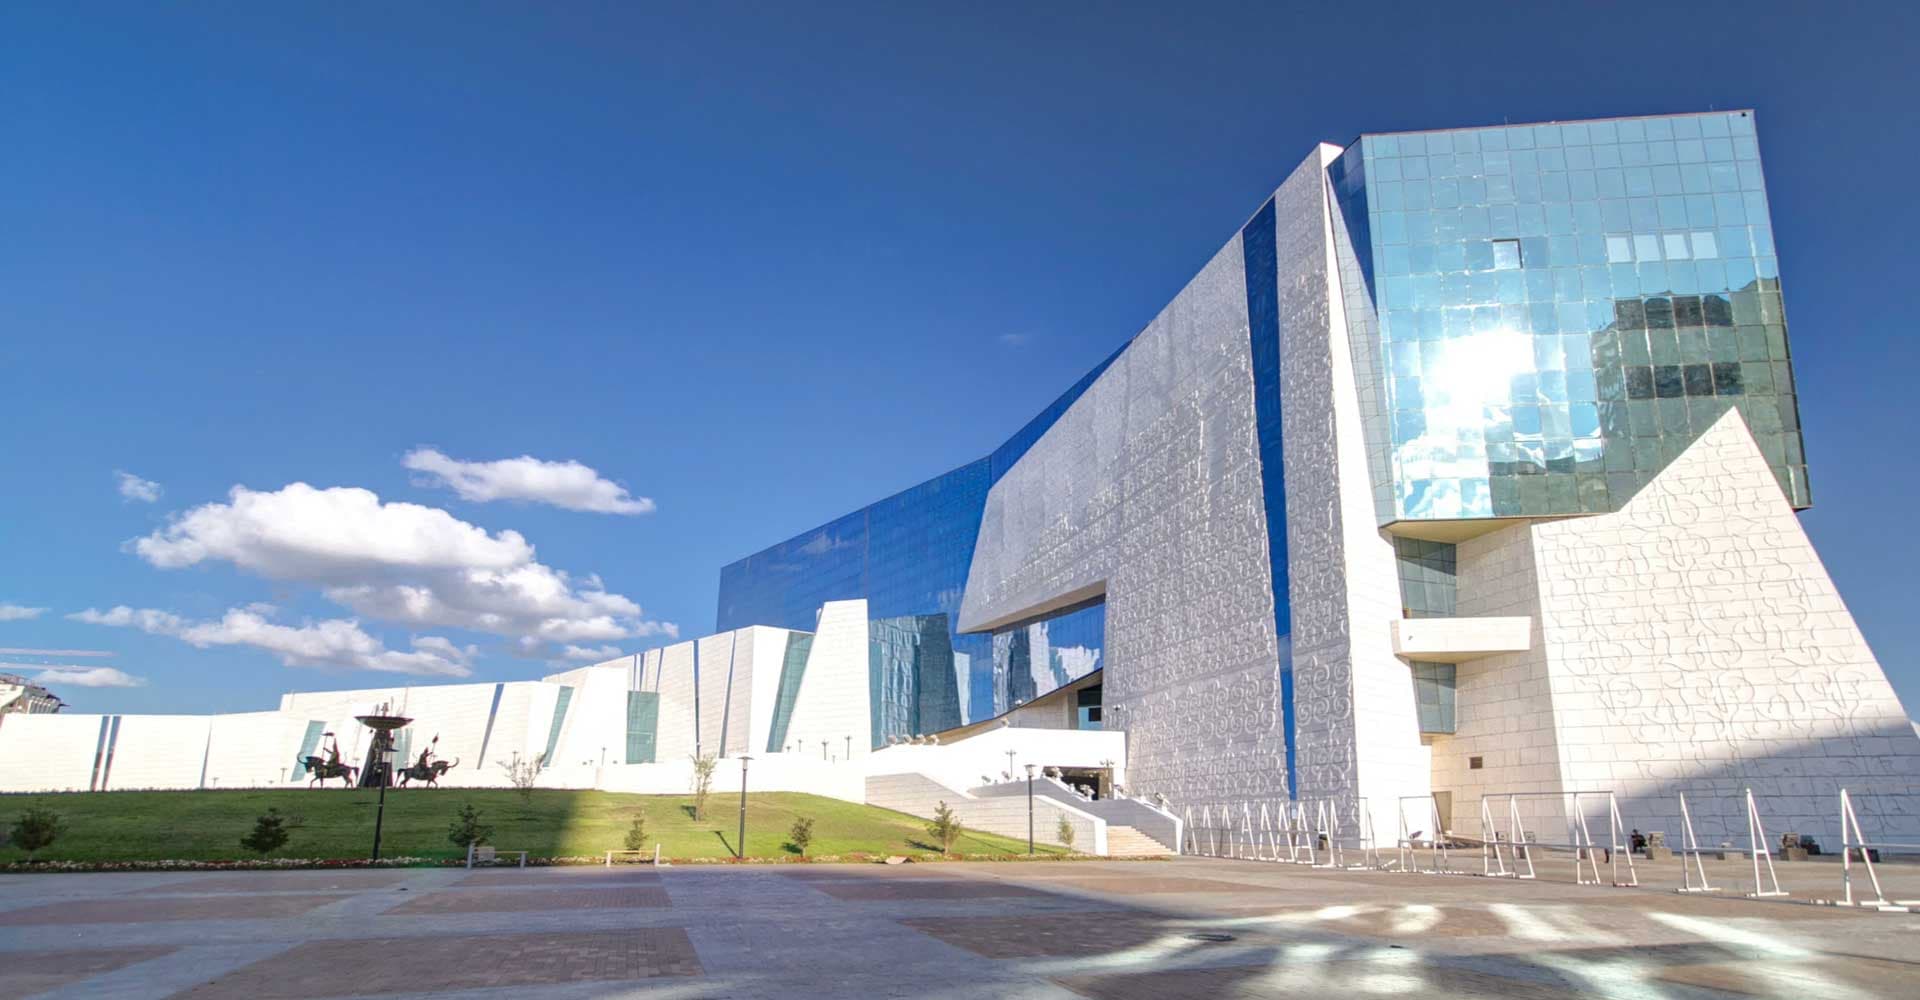 National Museum of the Republic of Kazakhstan